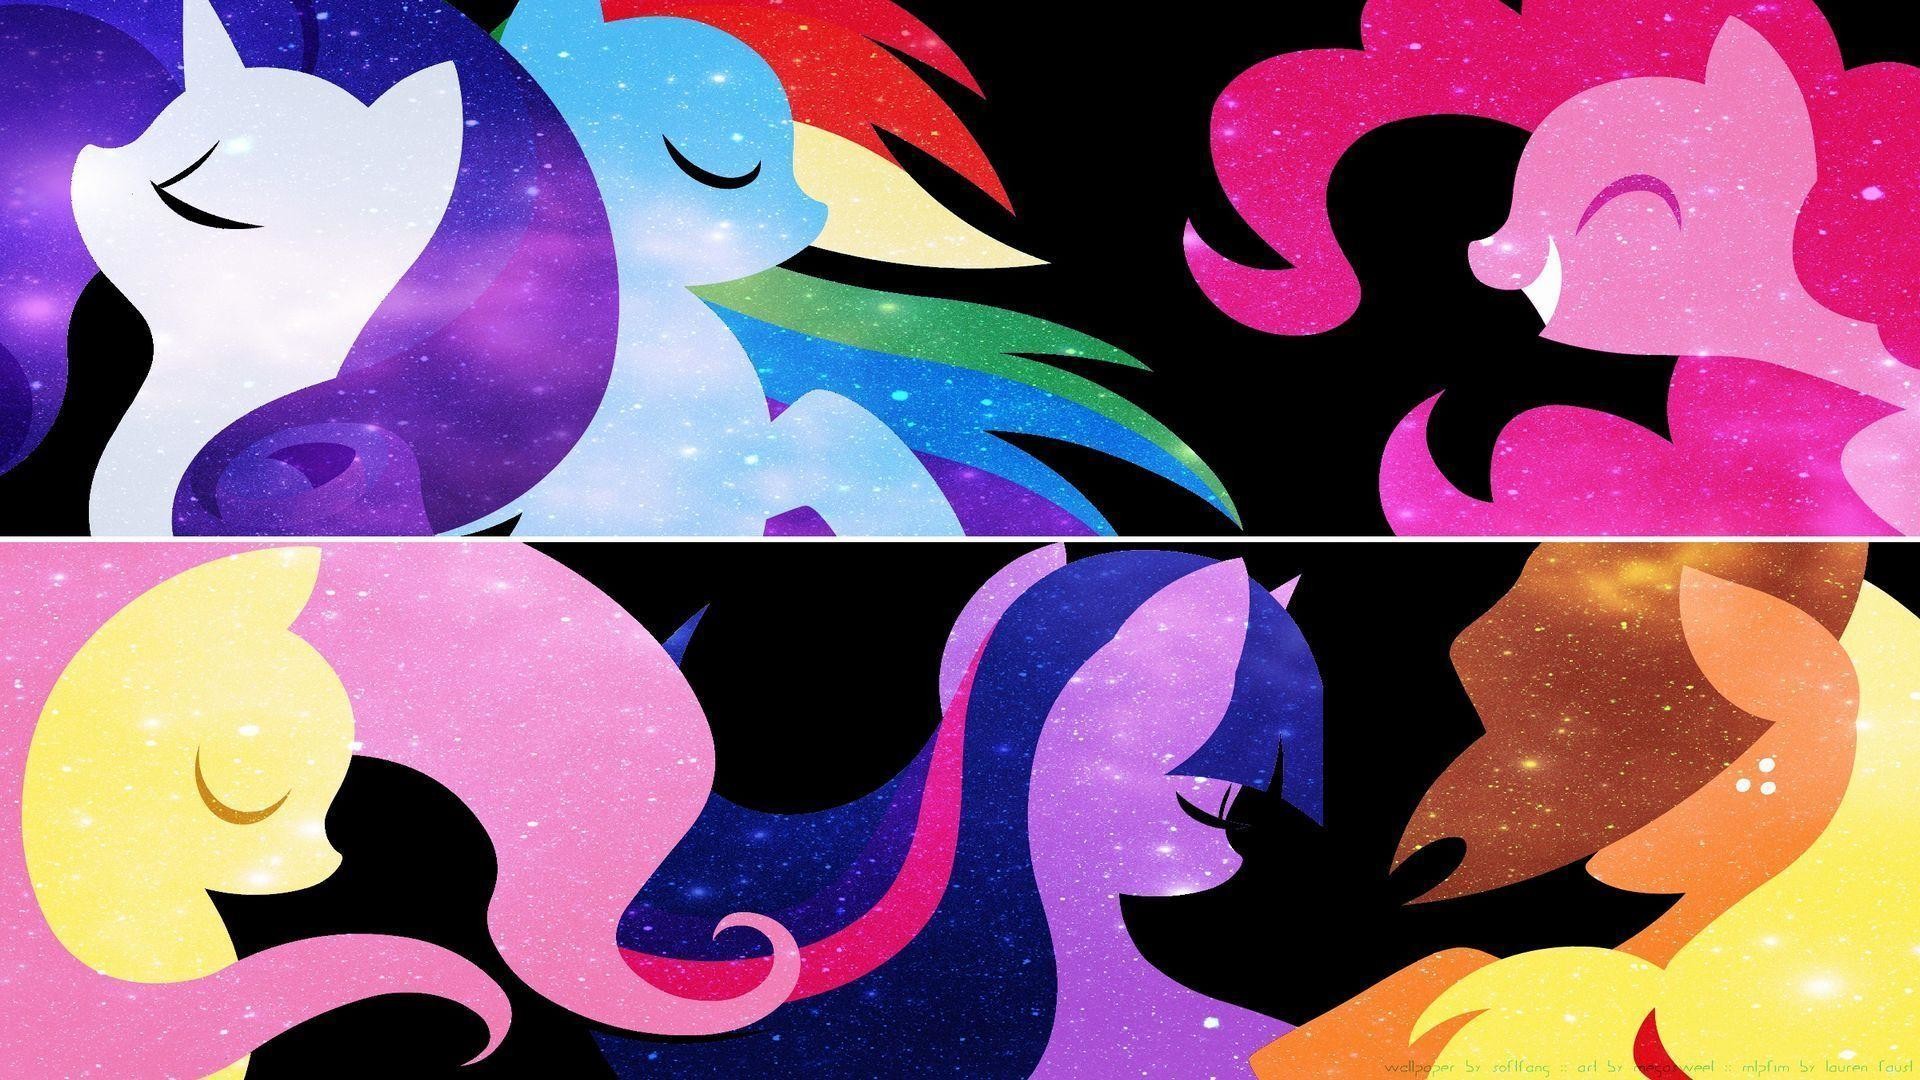 mein kleines pony wallpaper android,muster,lila,text,grafikdesign,design